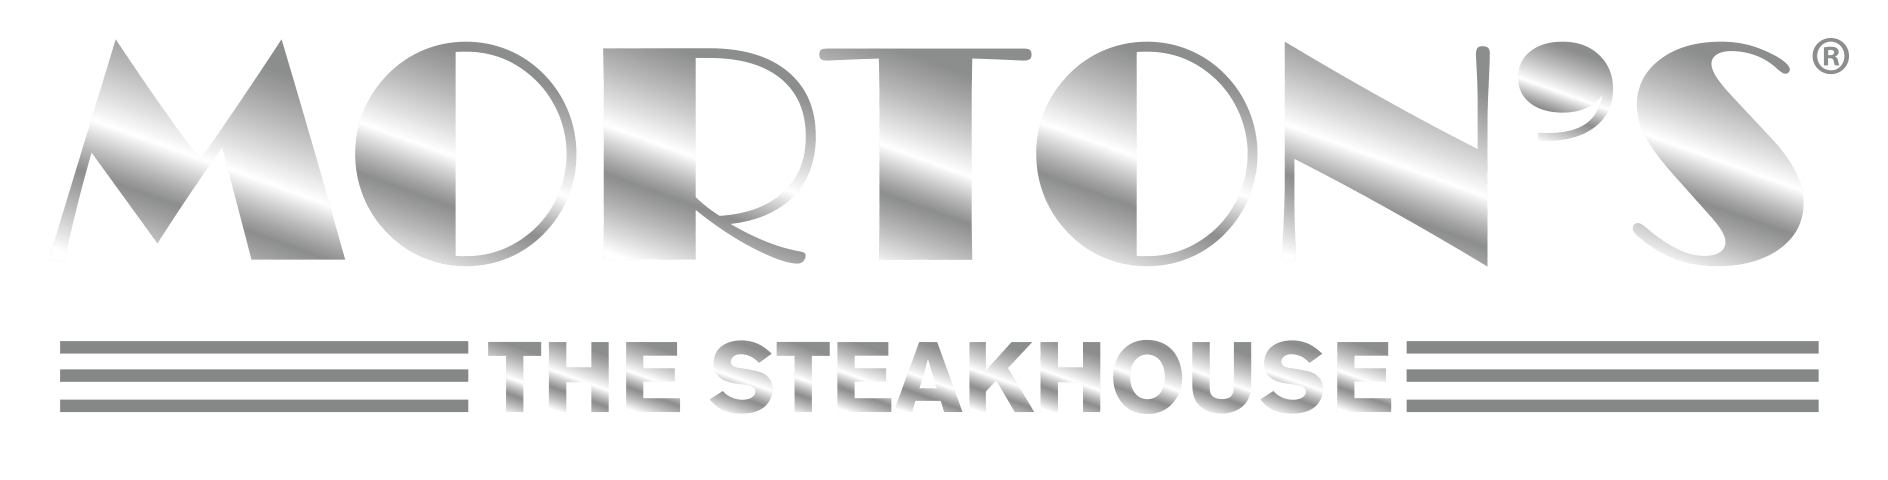 Mortons the Steakhouse logo